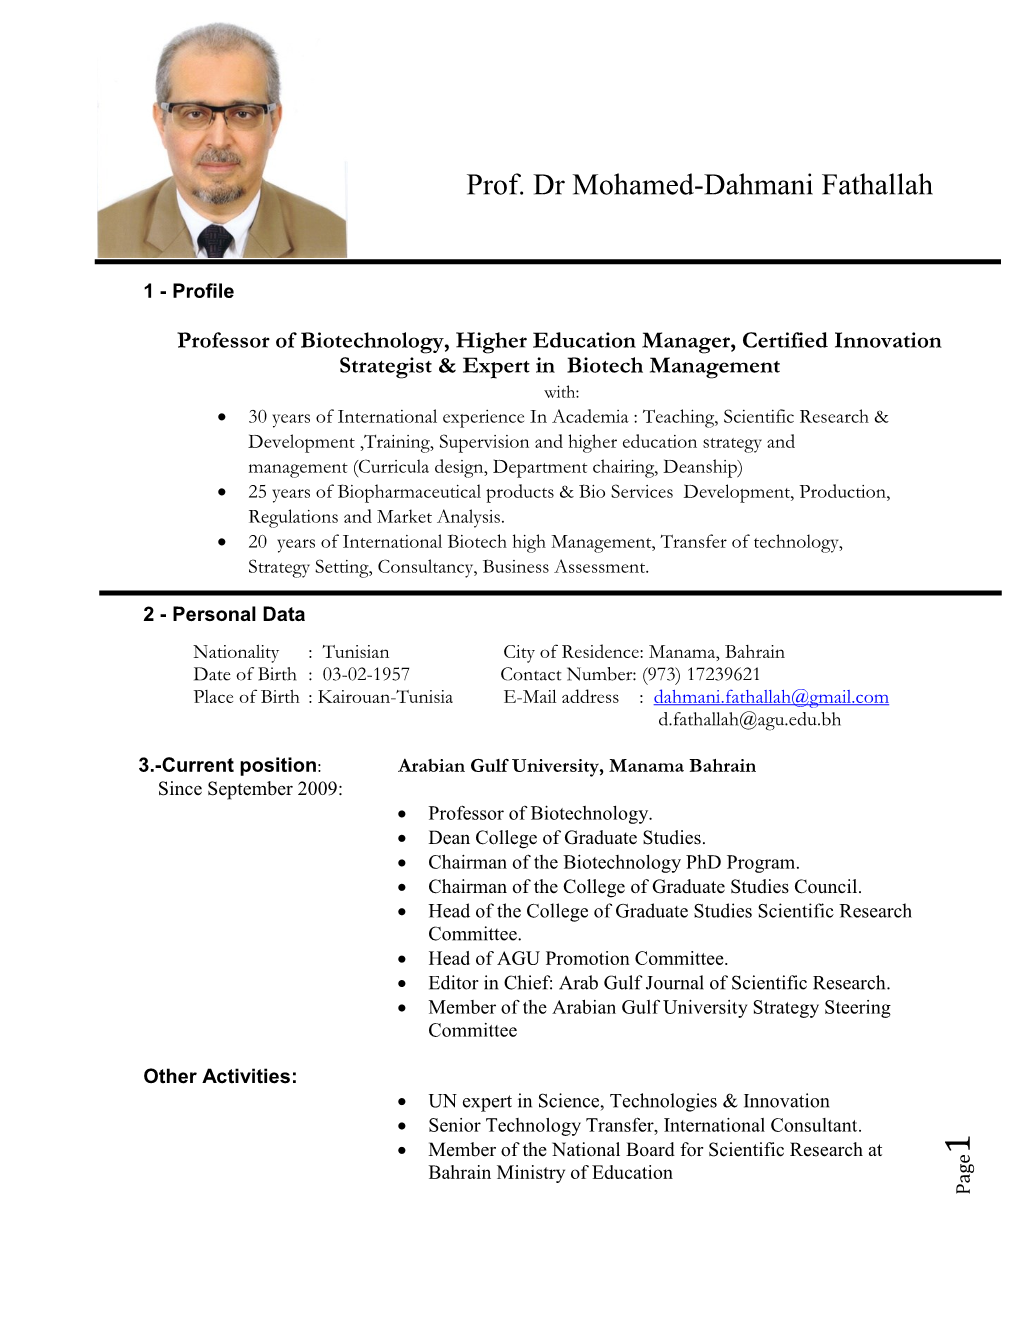 Prof. Dr Mohamed-Dahmani Fathallah